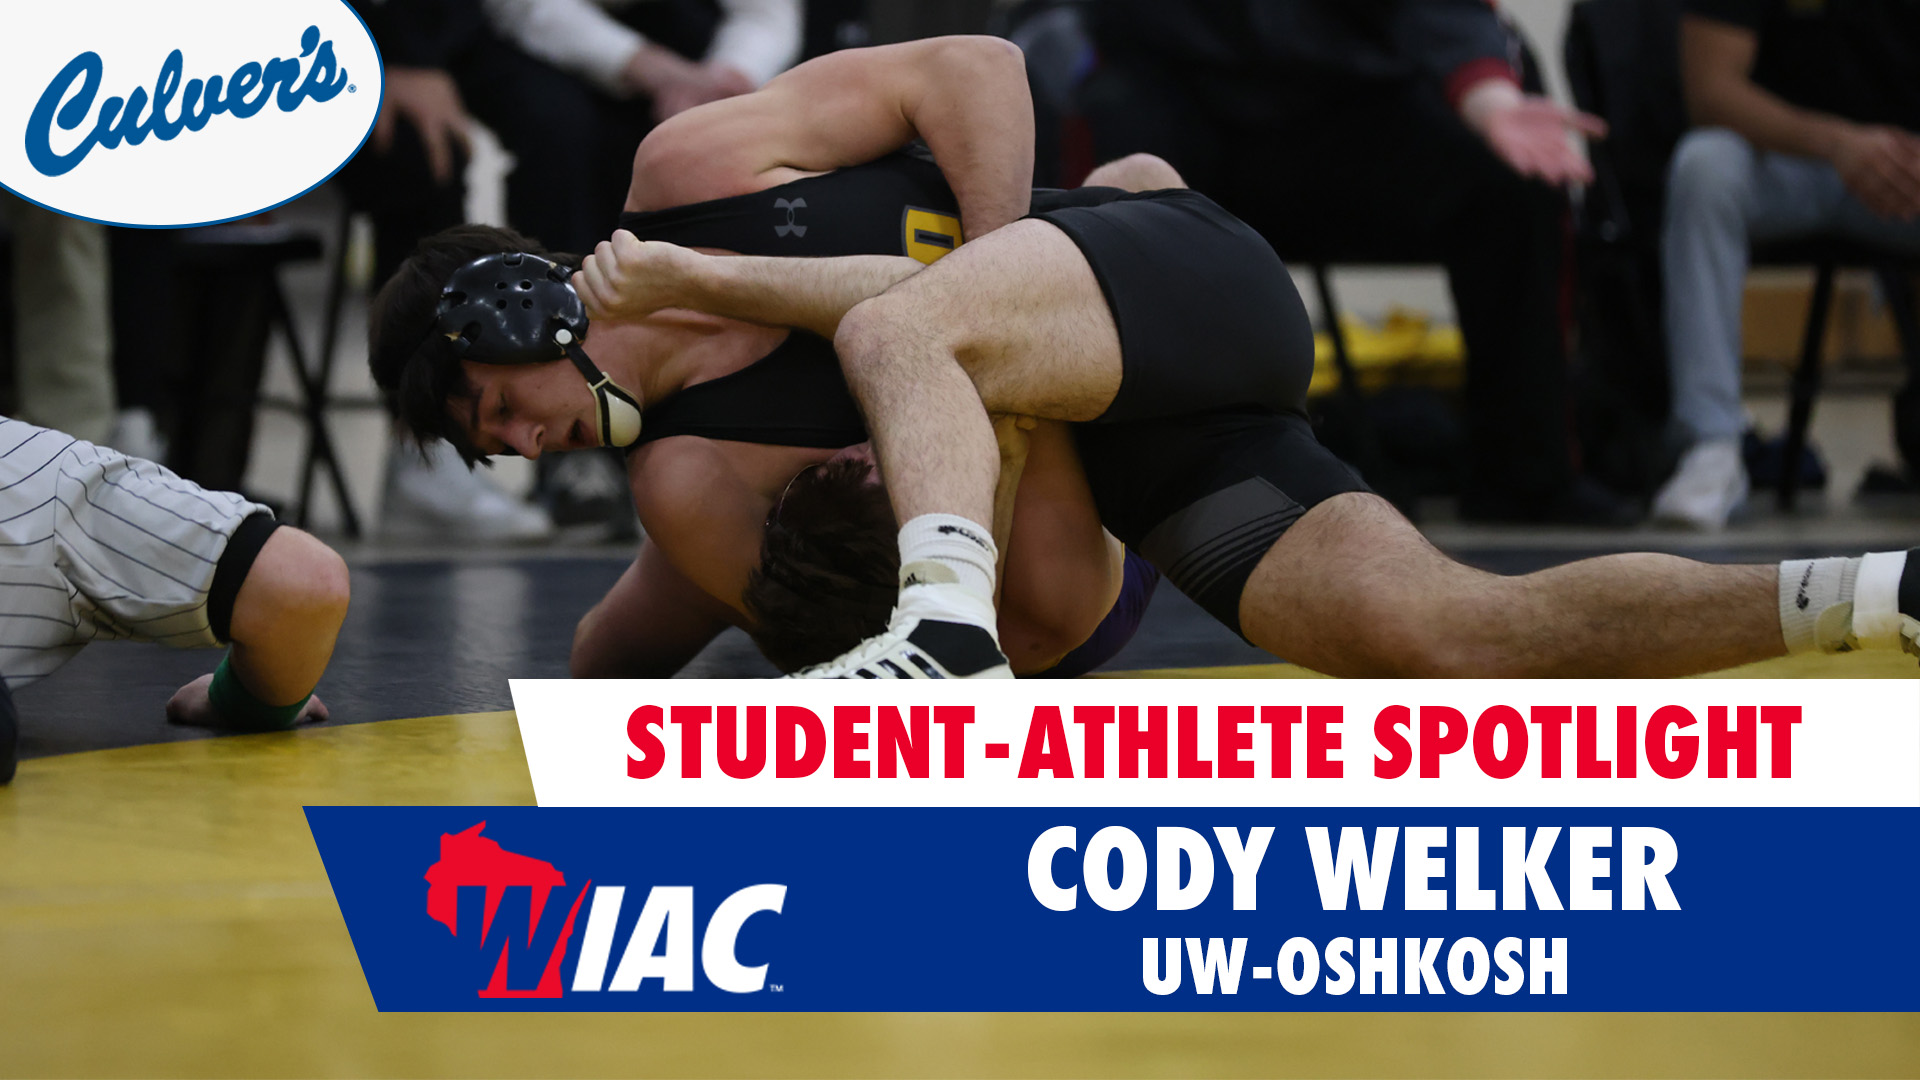 WIAC Student-Athlete Spotlight: Cody Welker